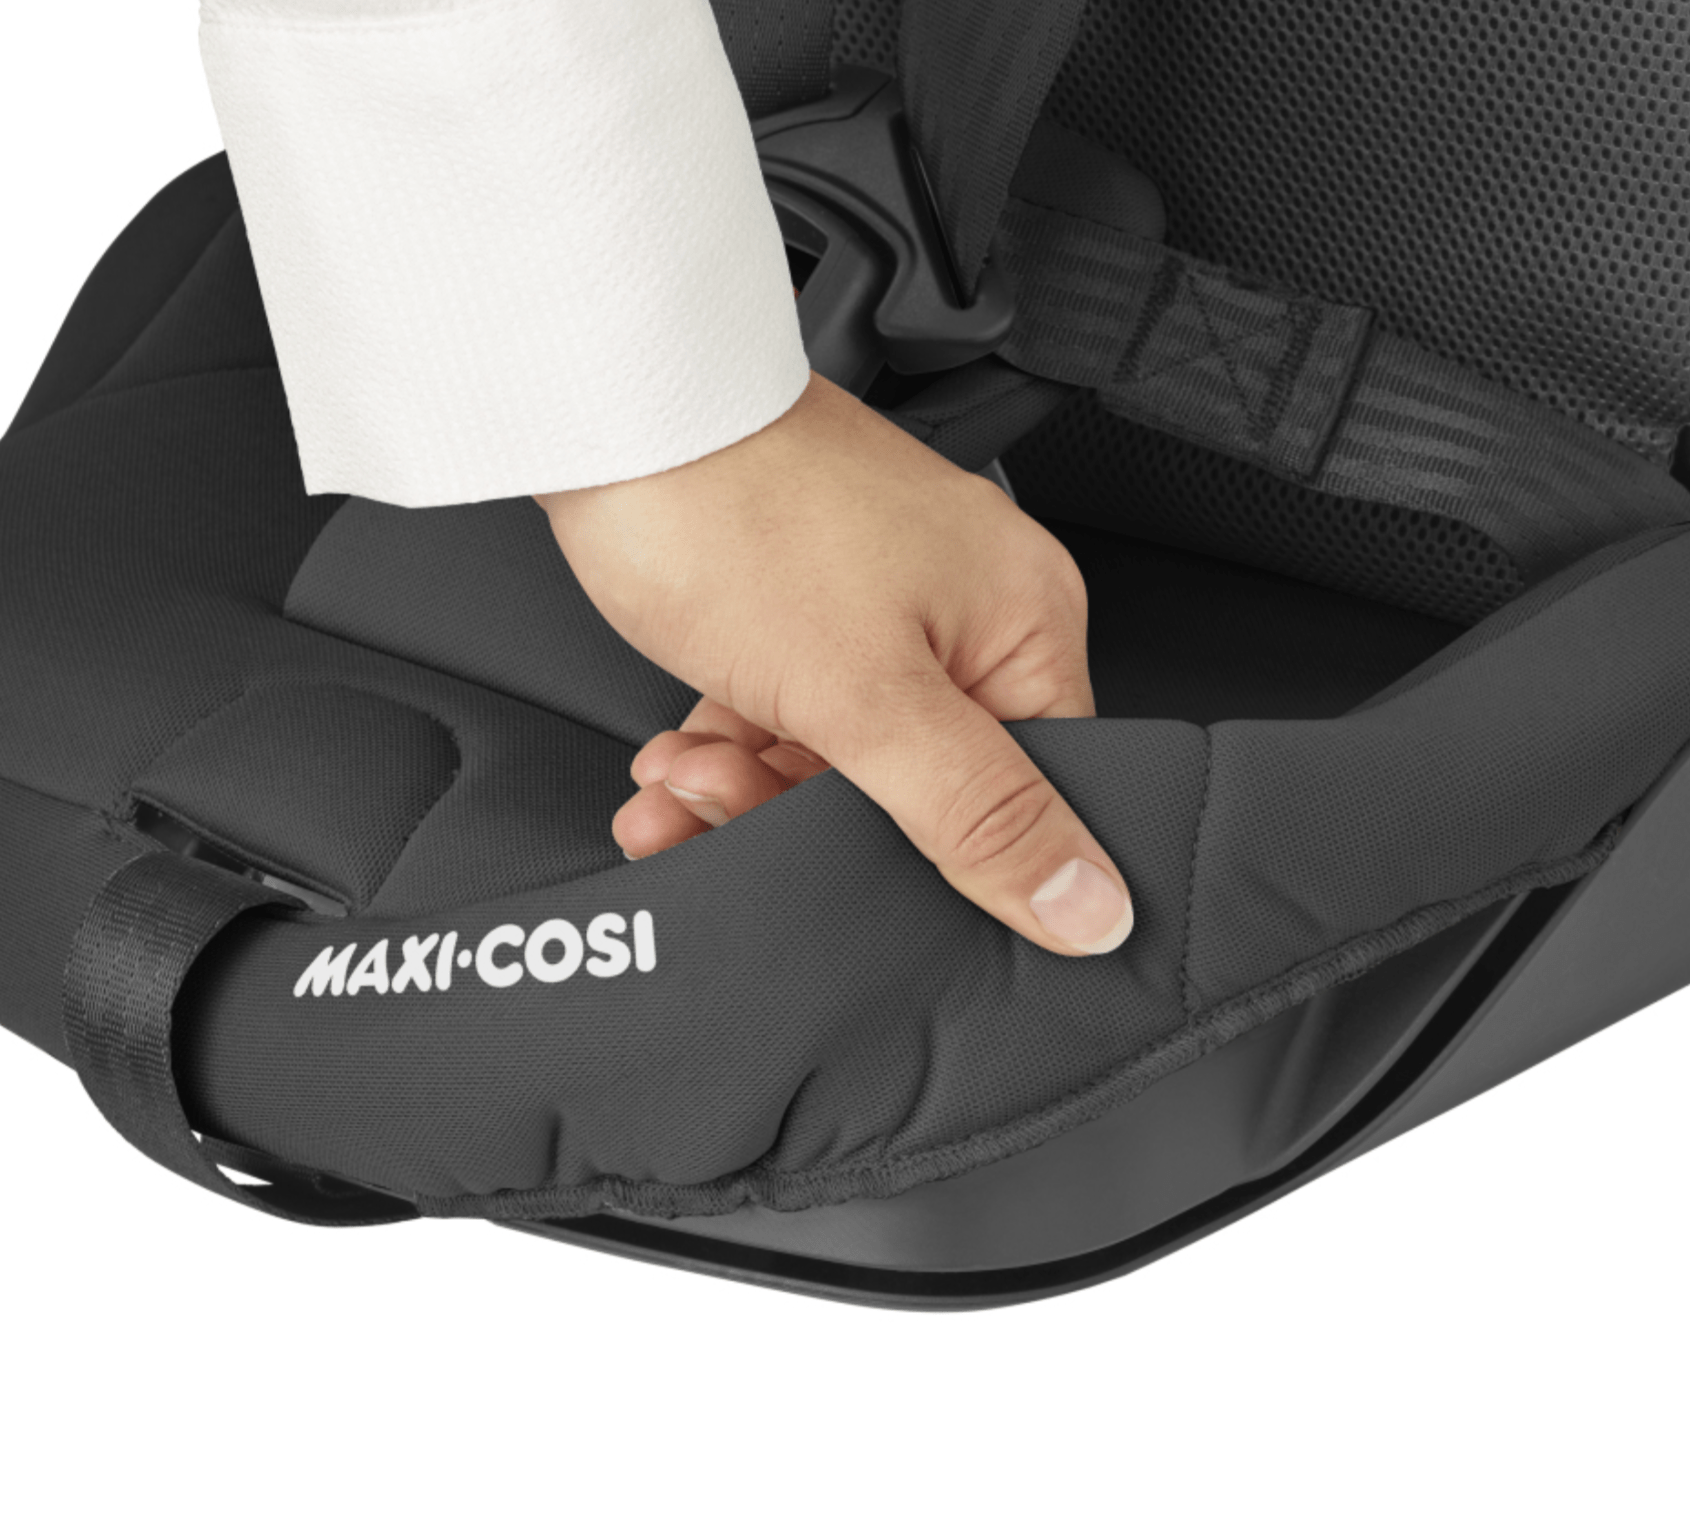 Maxi-Cosi Car Seat Maxi Cosi Nomad Car Seat - Due September